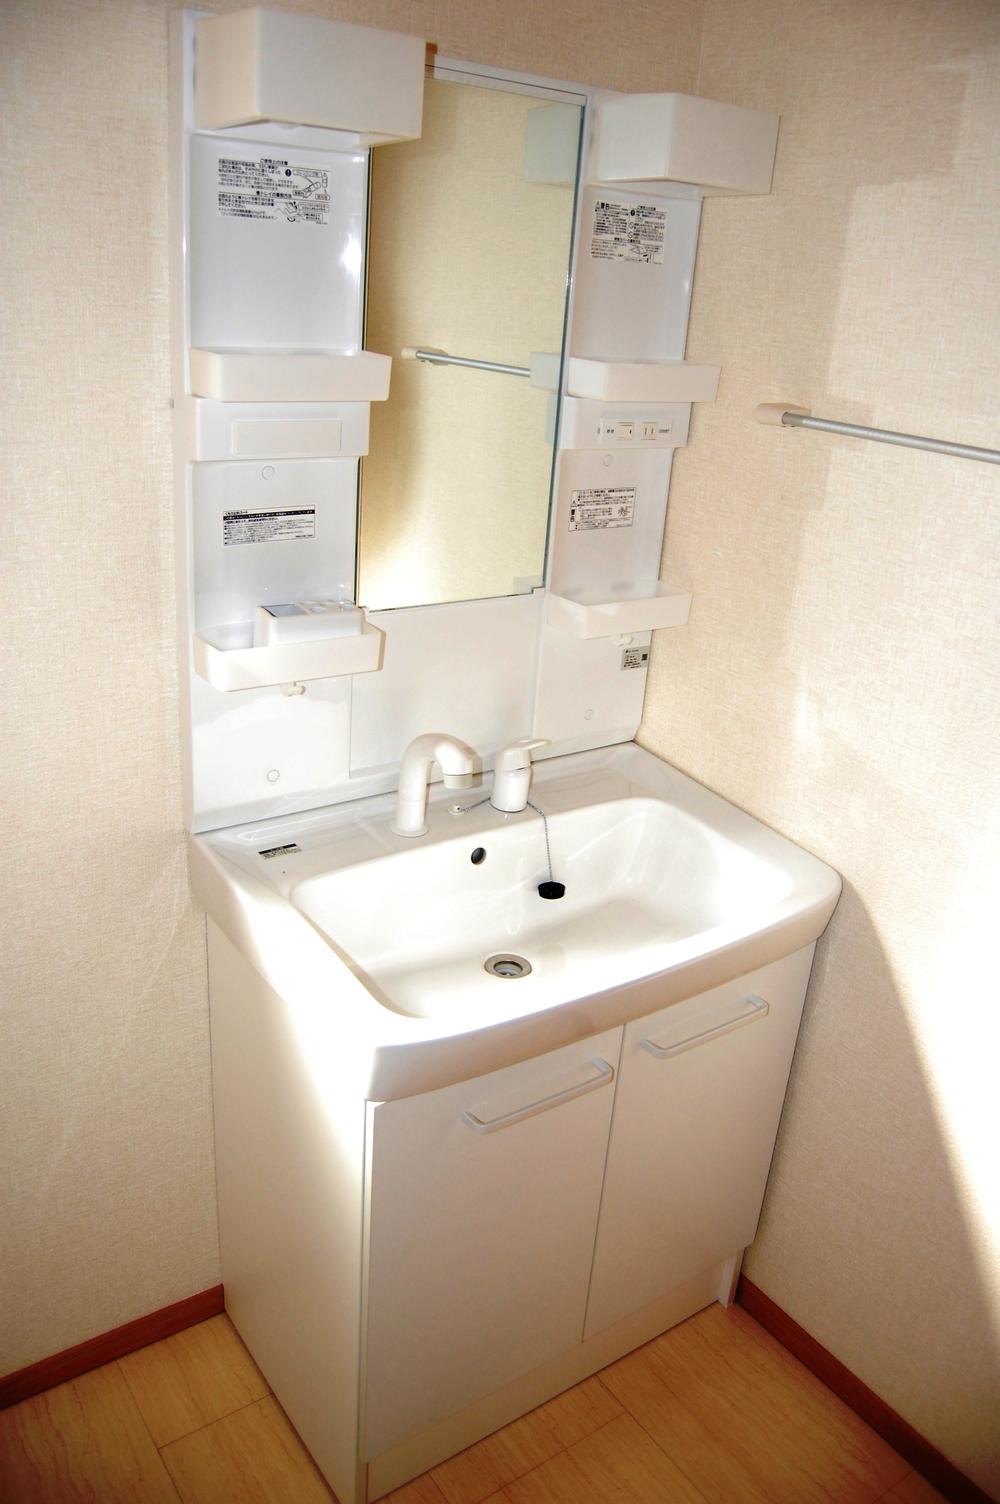 Wash basin, toilet. Same specifications Shampoo dresser